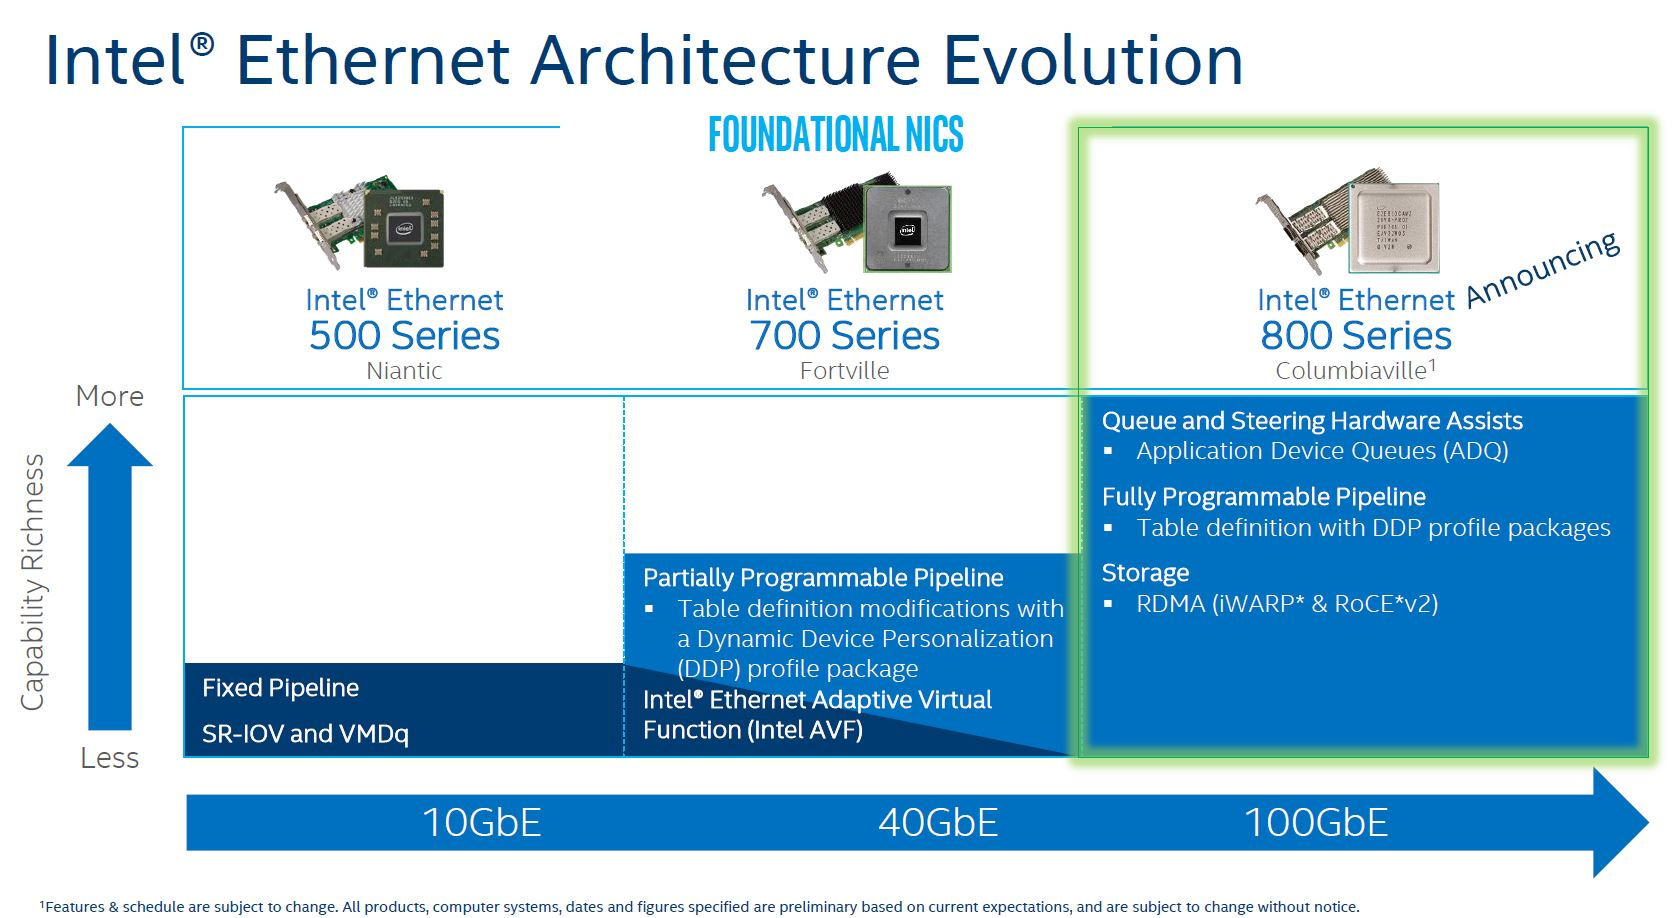 Intel Ethernet 800